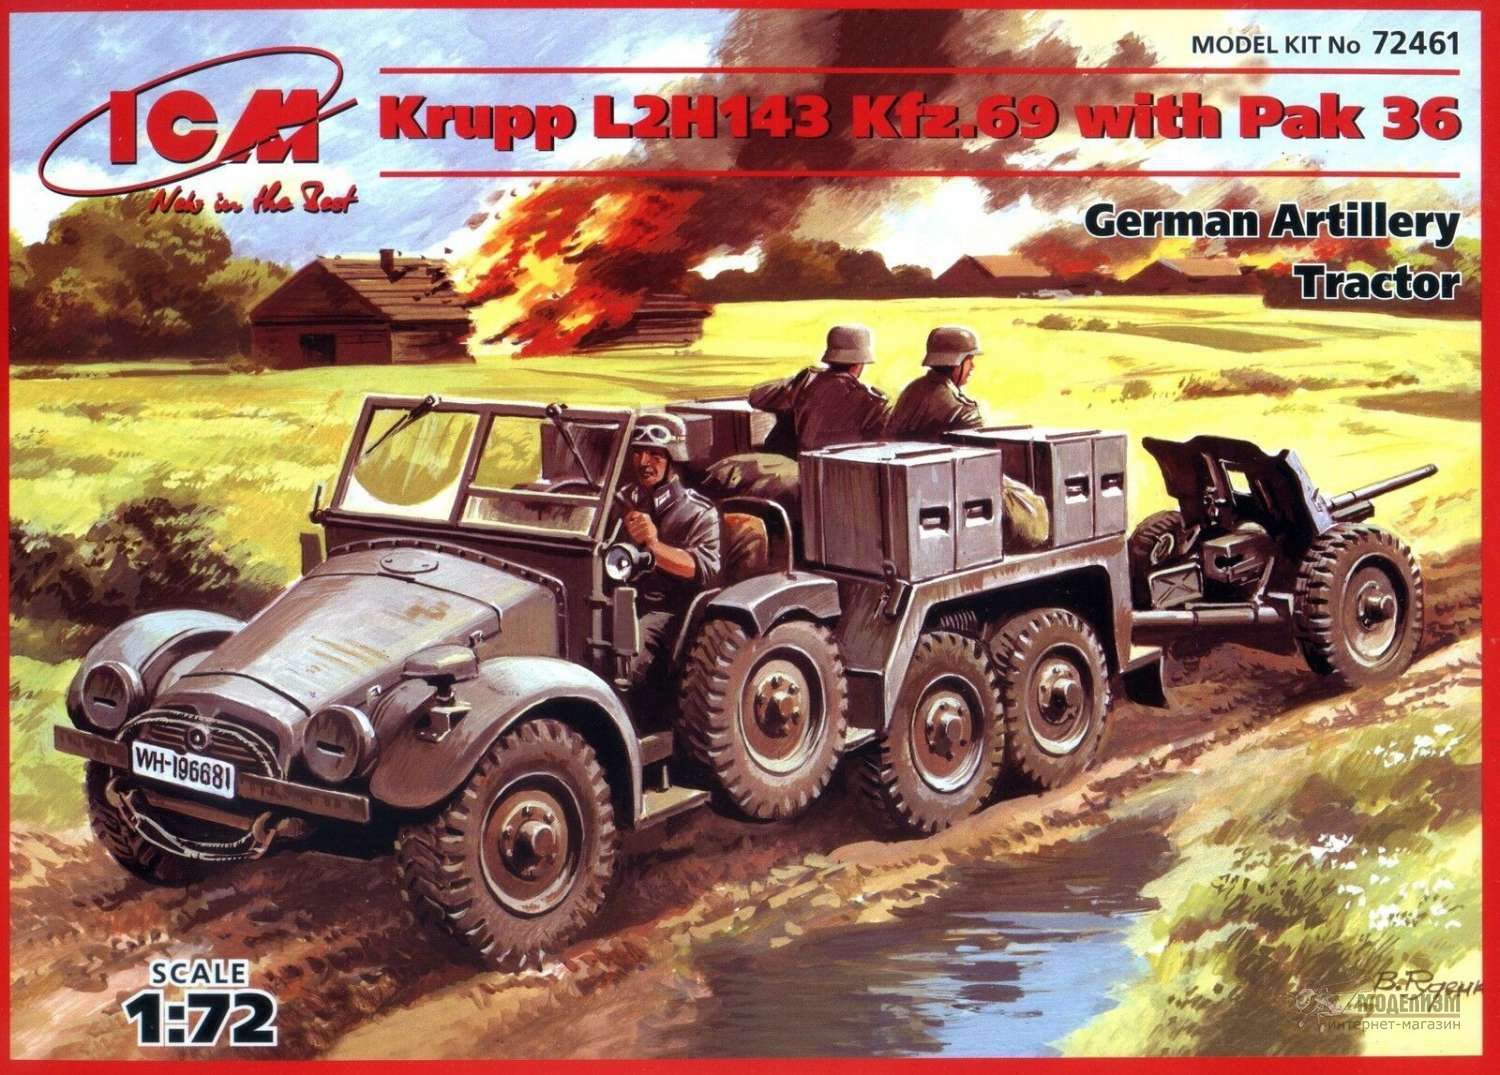 Krupp L2H143 Kfz.69 с пушкой Pak 36 ICM. Картинка №1